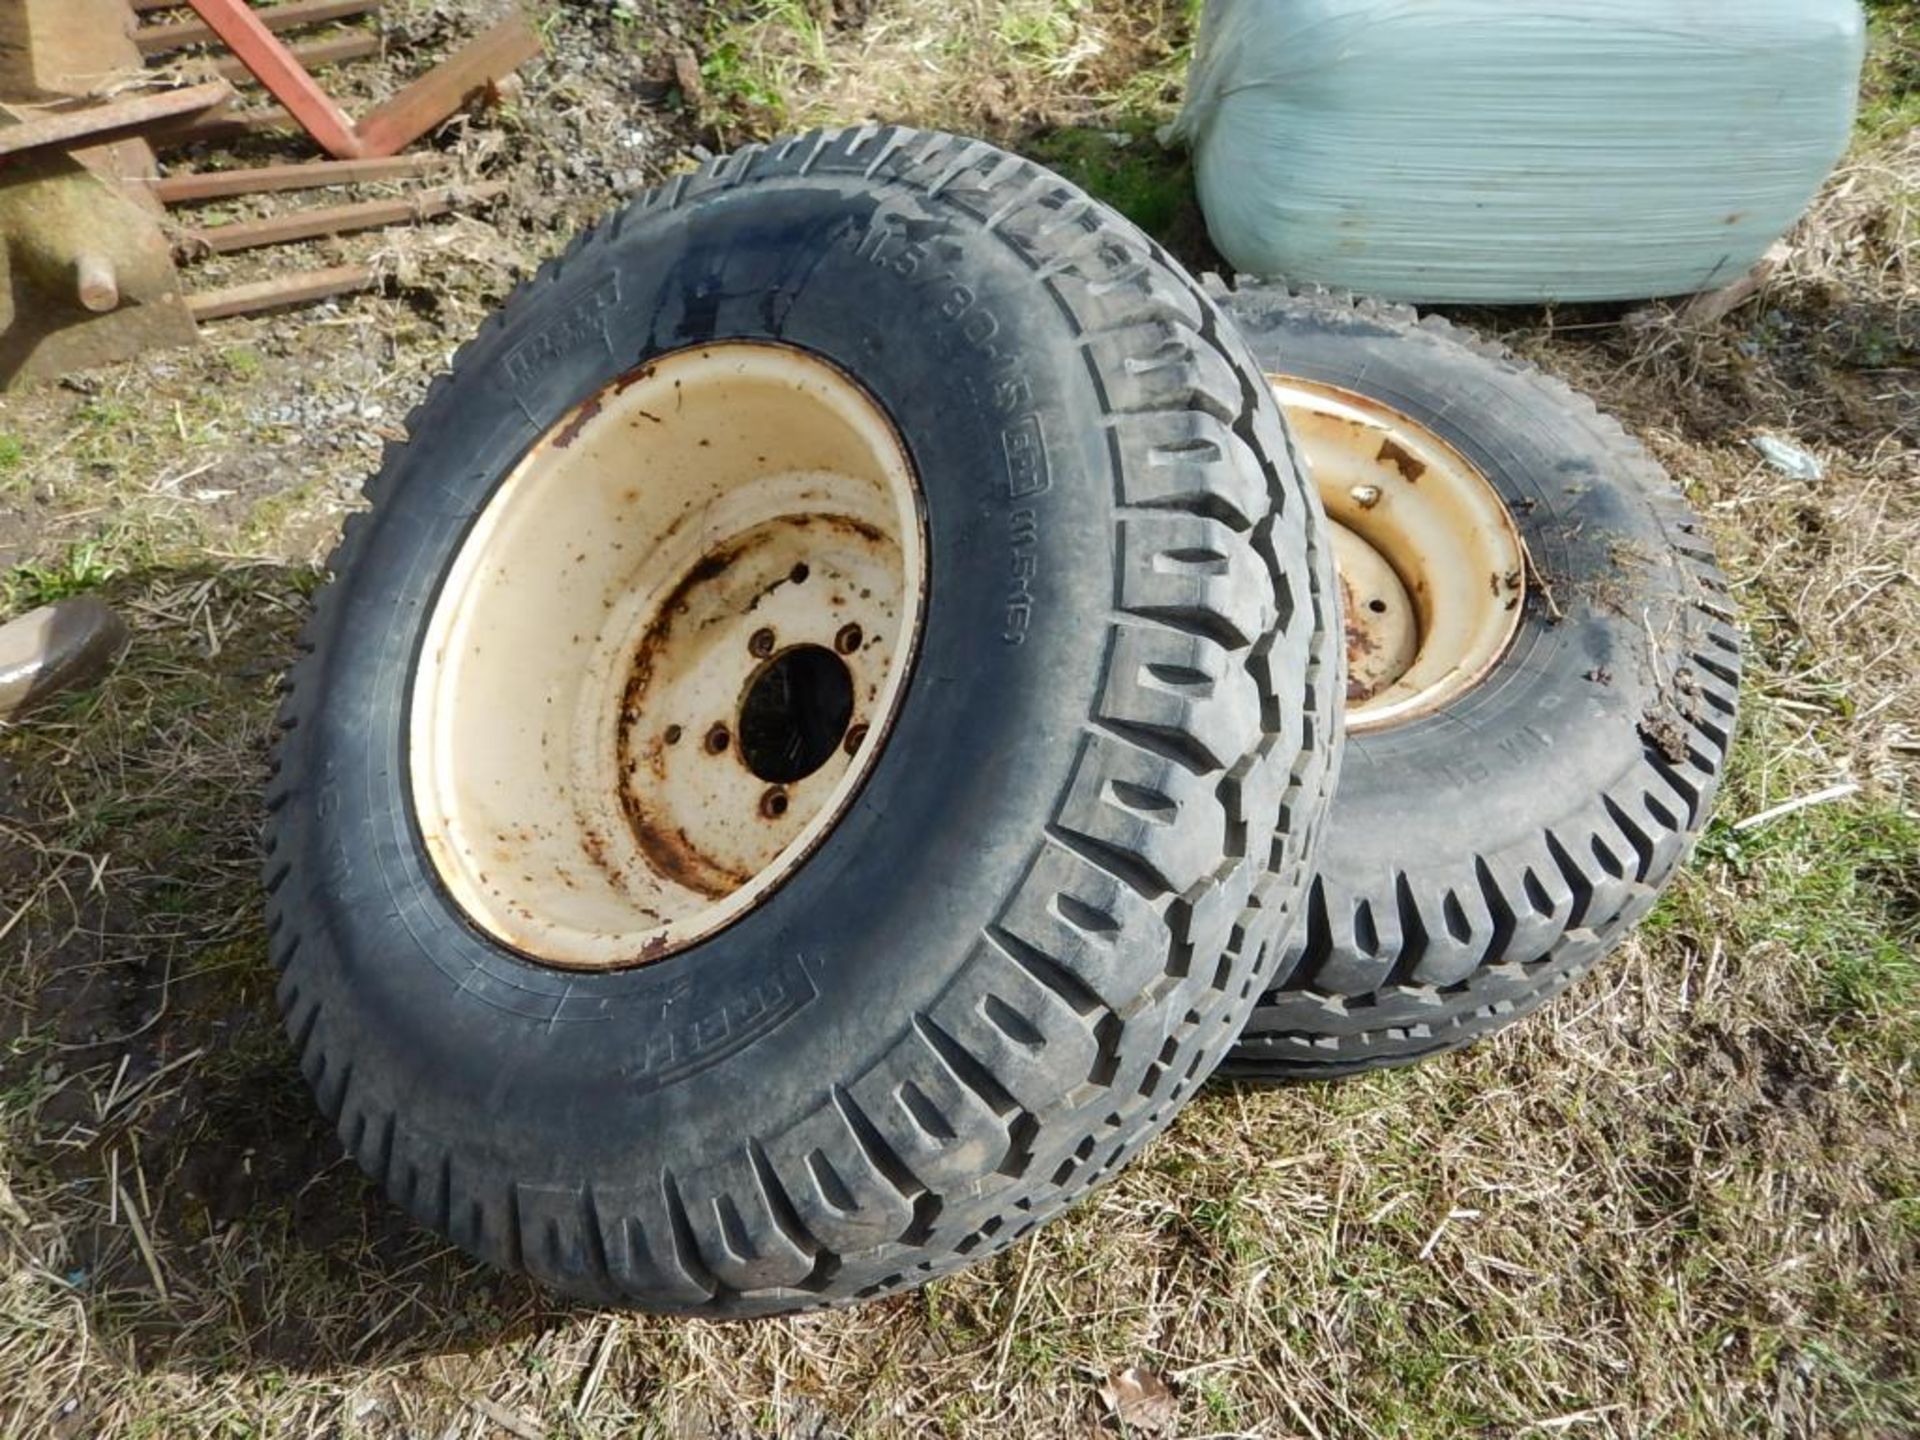 Pr. 11.5/80-15 5stud wheels and tyres